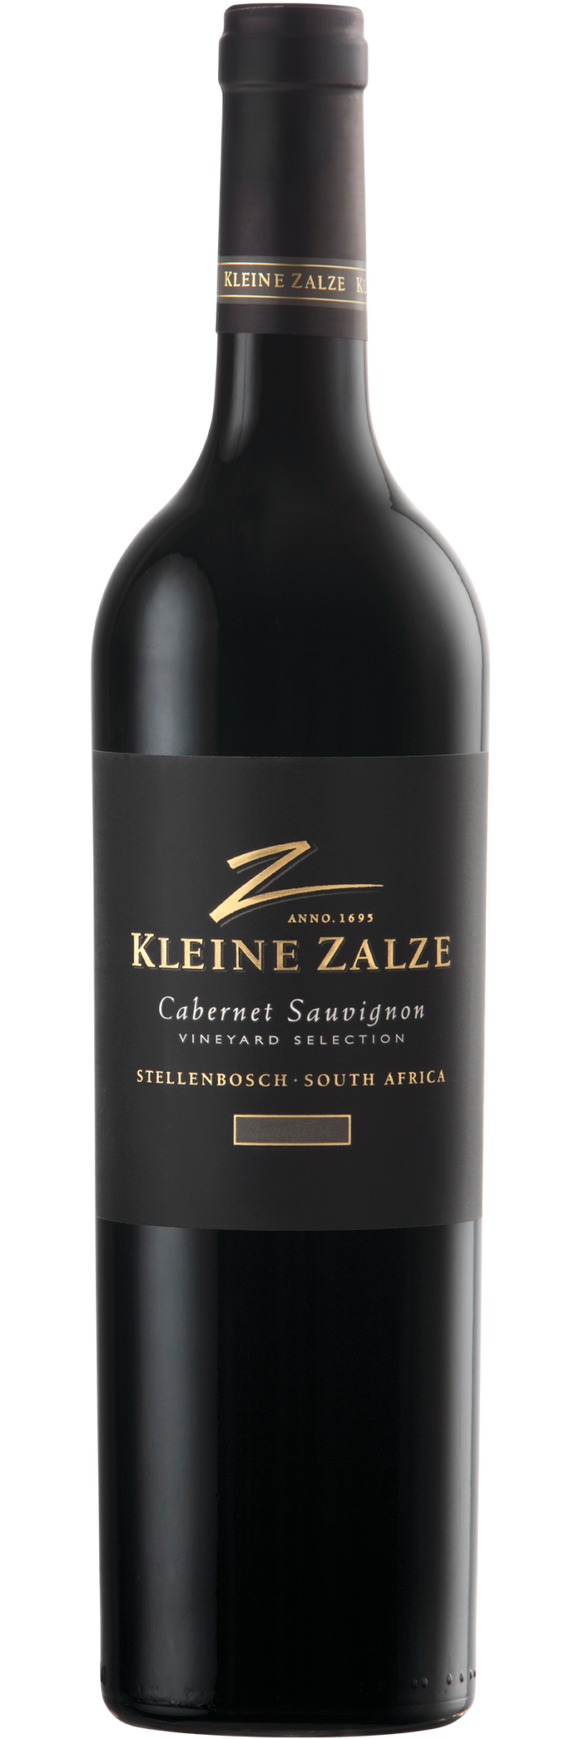 Kleine Zalze Vineyard Selection Cabernet Sauvignon 2019